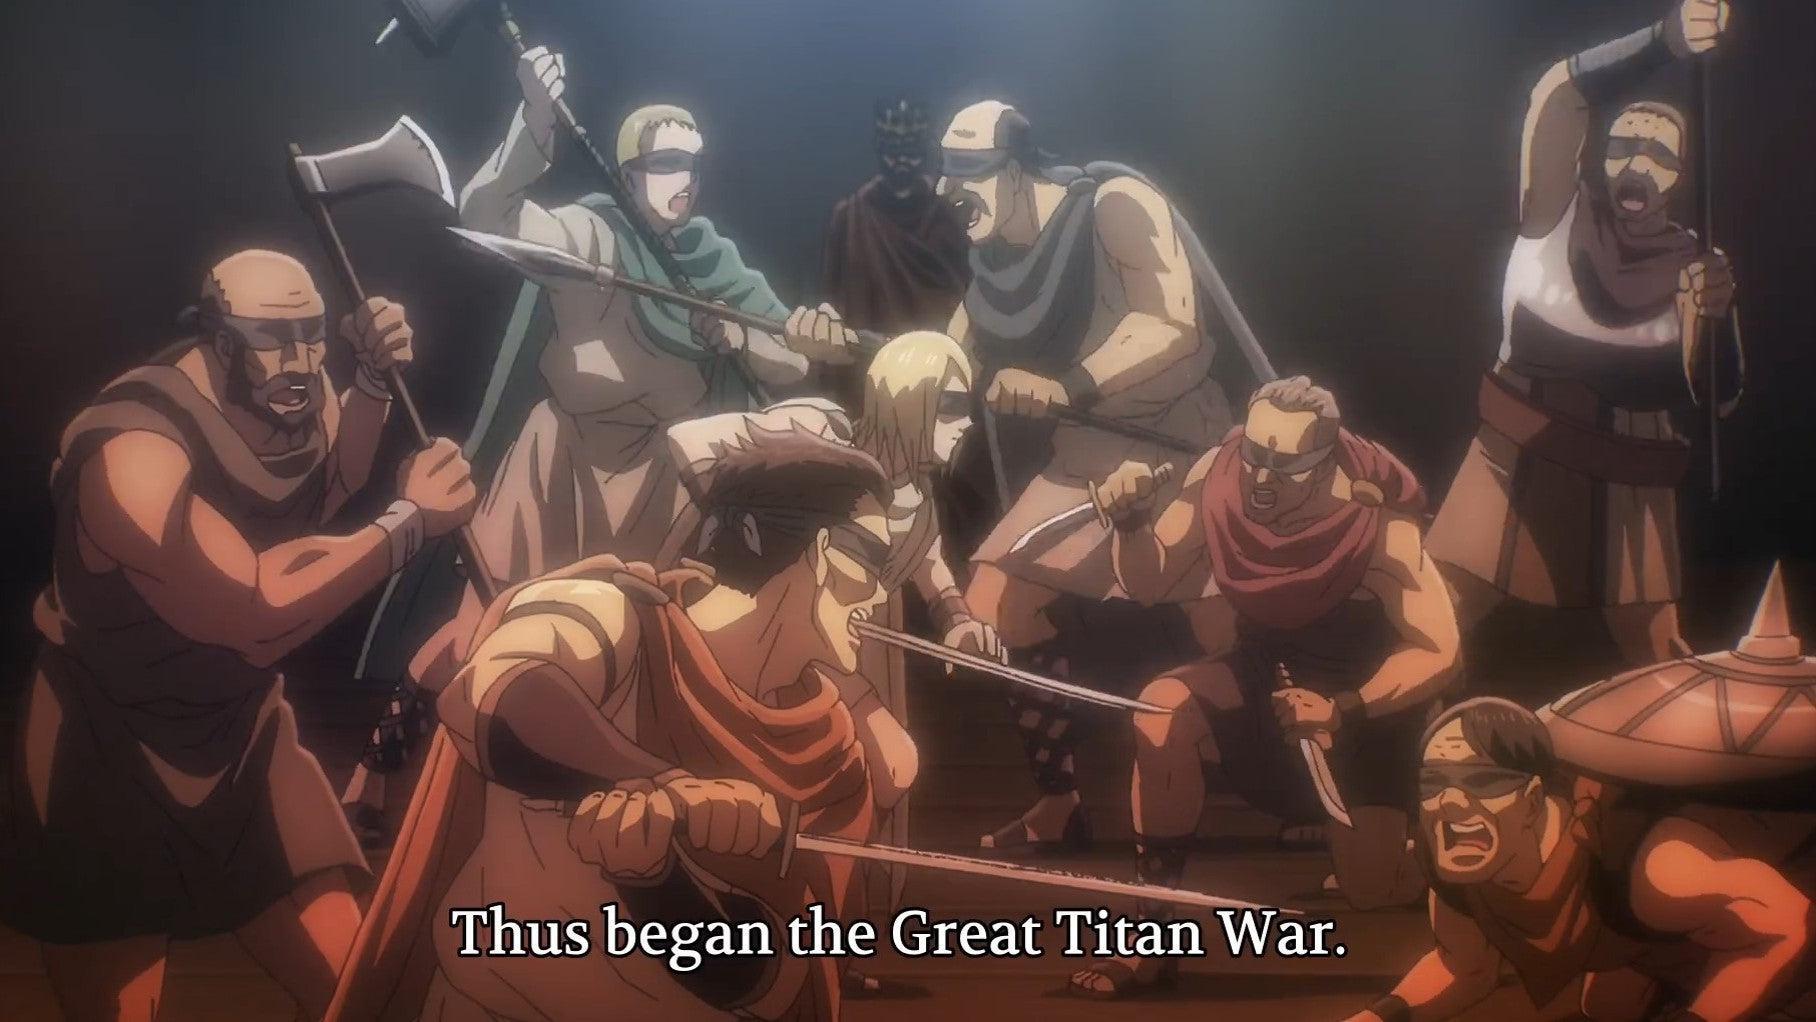 Attack On Titan The Great Titan War The War Began